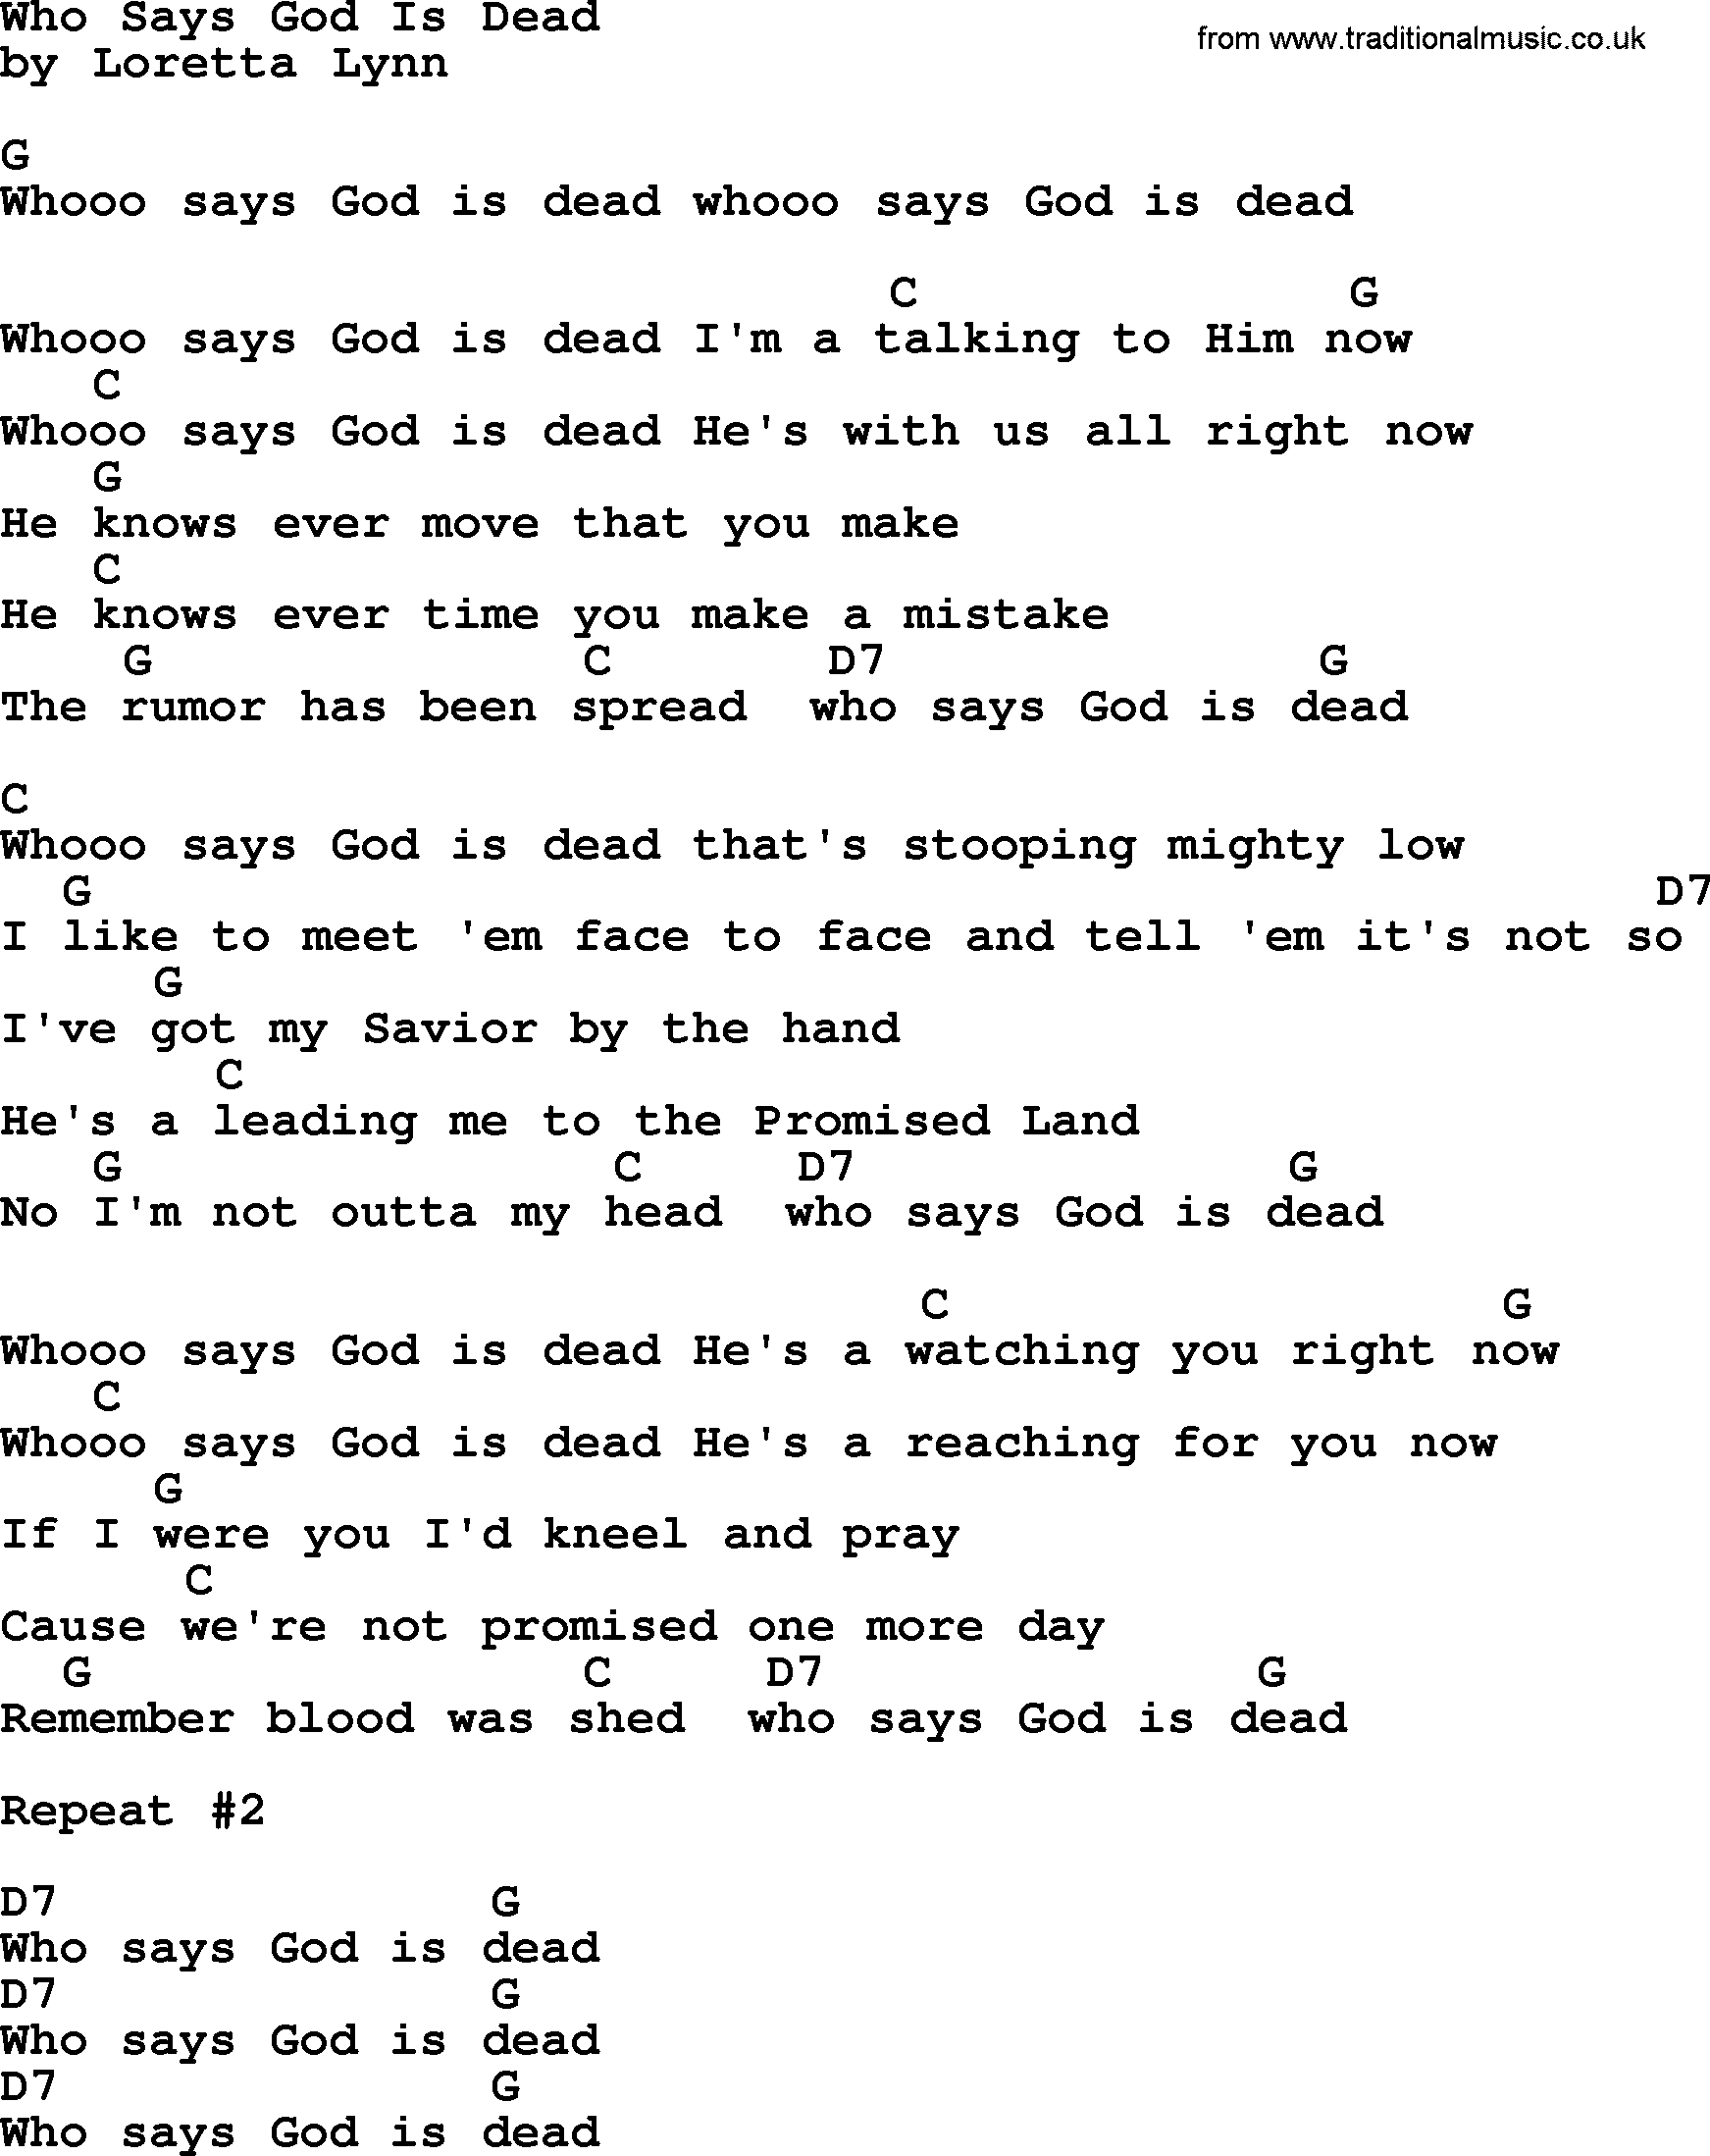 Loretta Lynn song: Who Says God Is Dead lyrics and chords